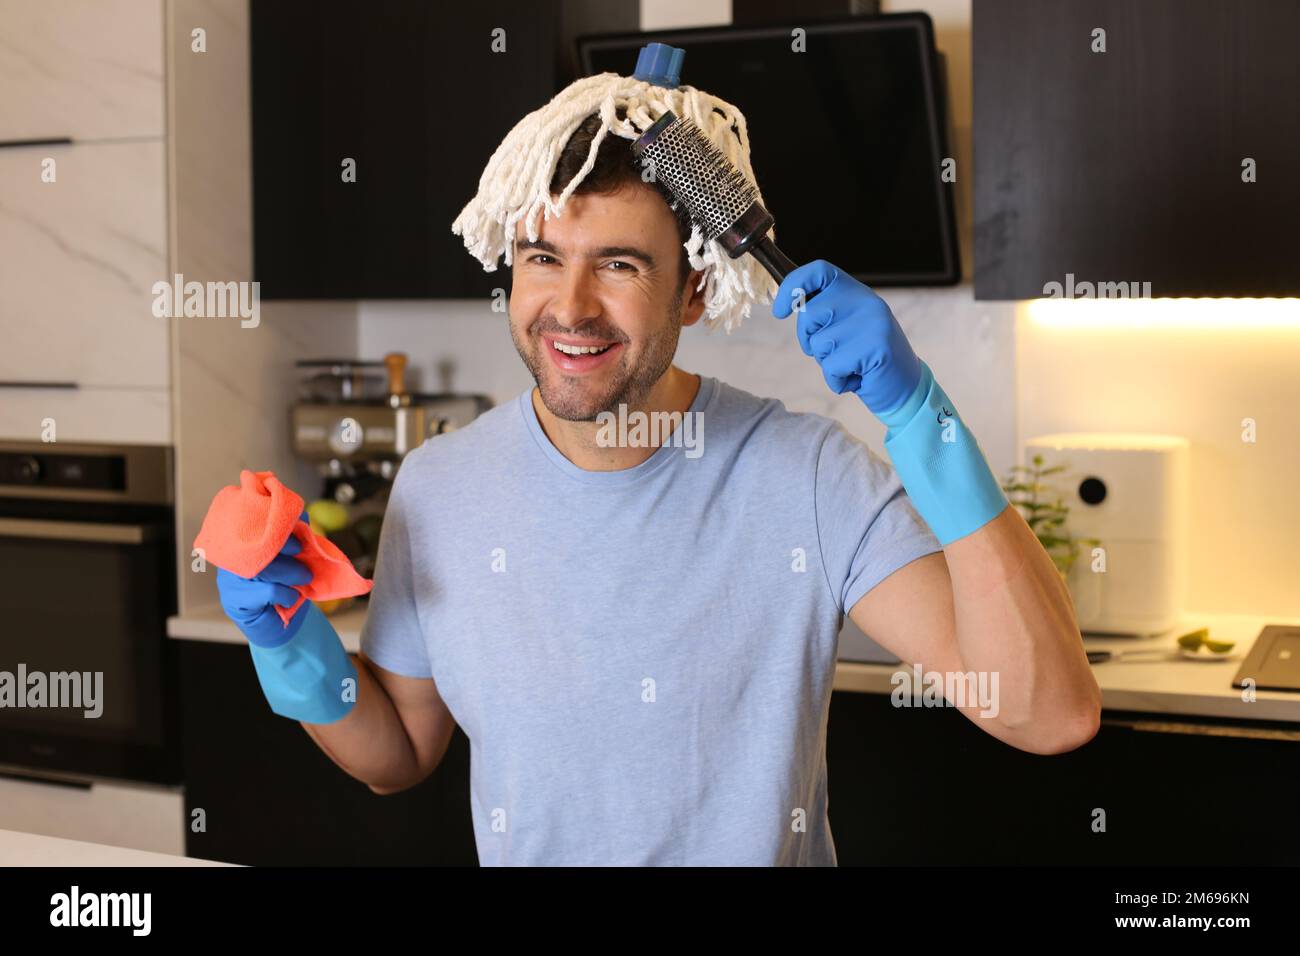 Funny man combing his mop hair Stock Photo